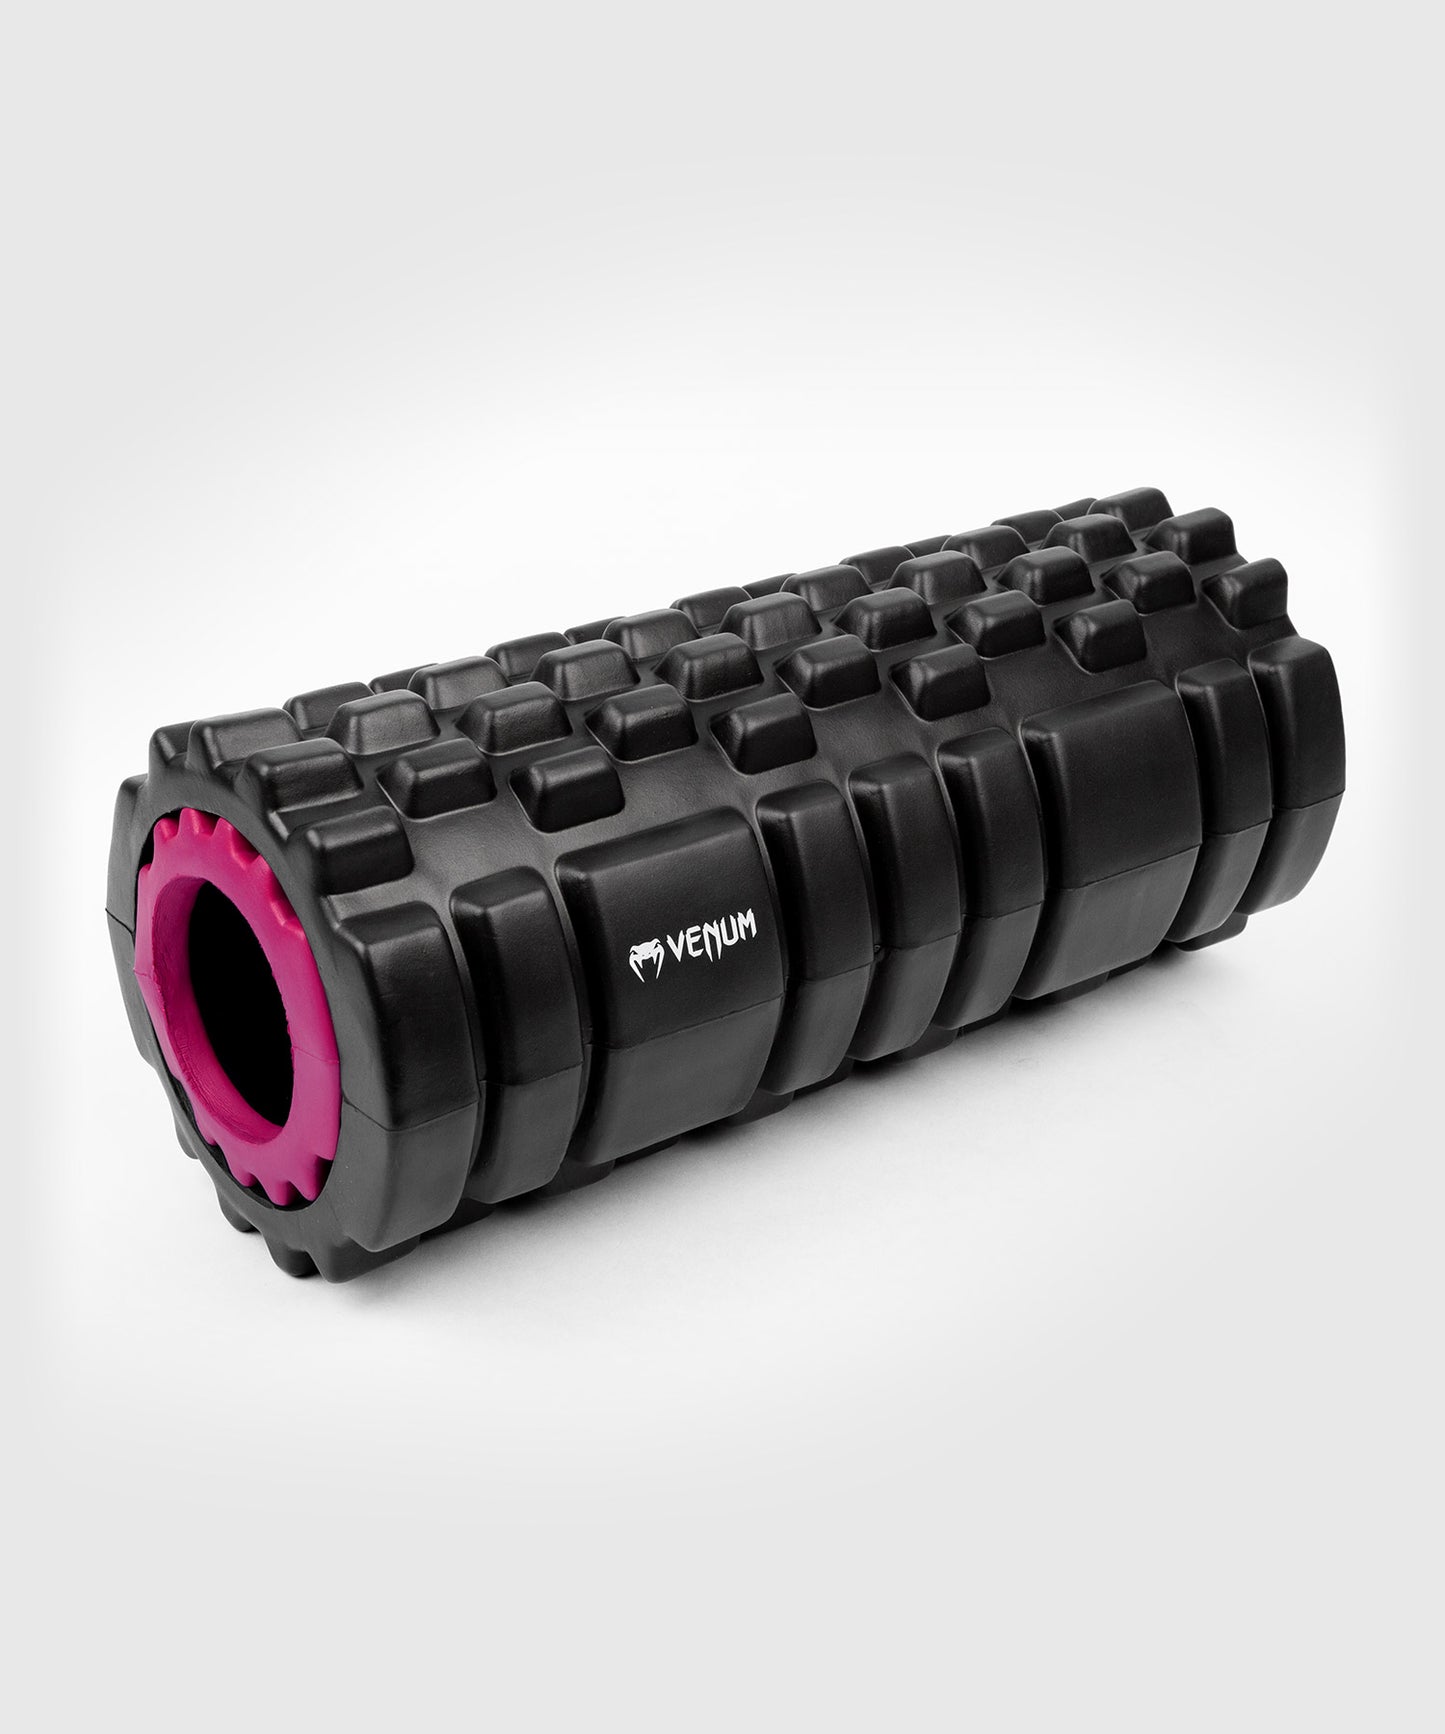 Venum Spirit Foam Roller - Black/Pink